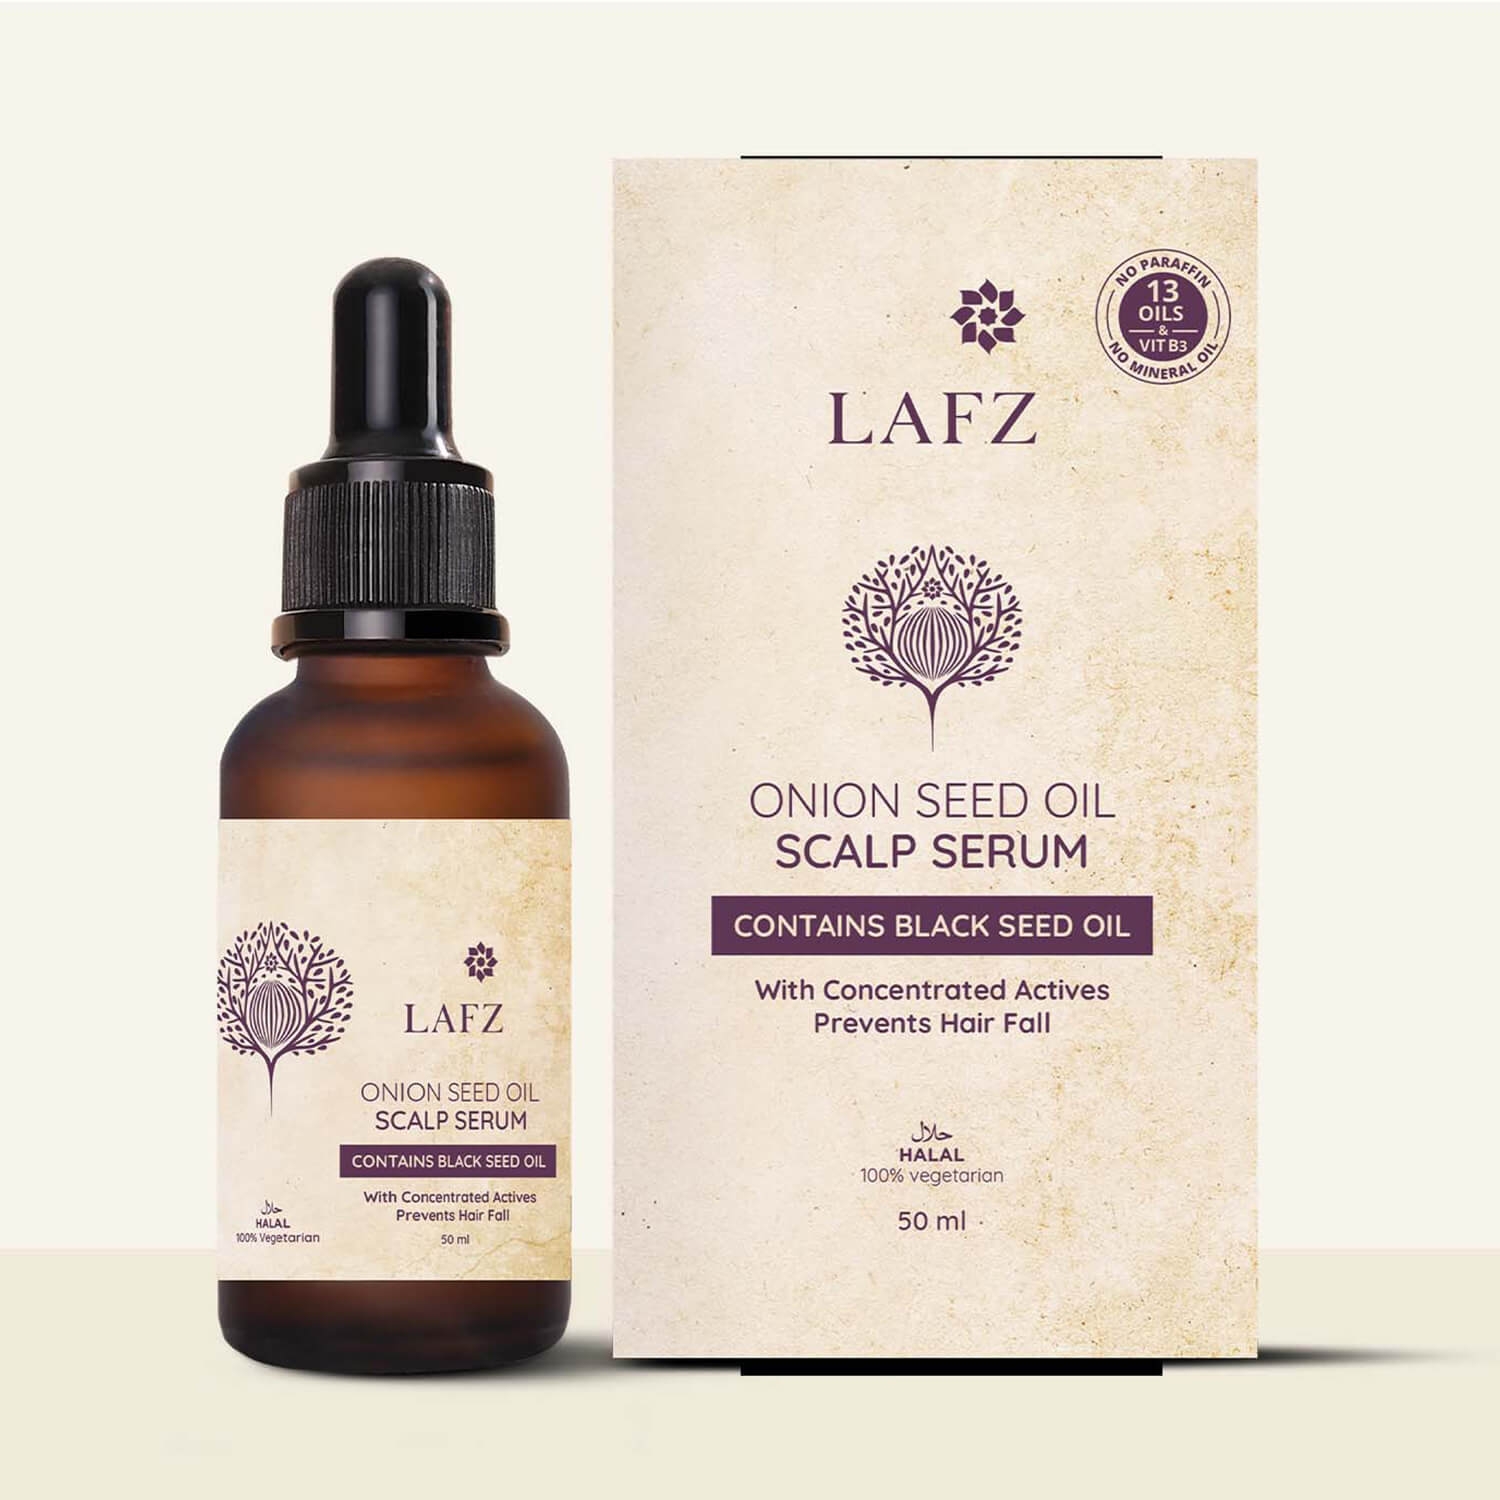 LAFZ Onion Seed Oil Scalp Serum